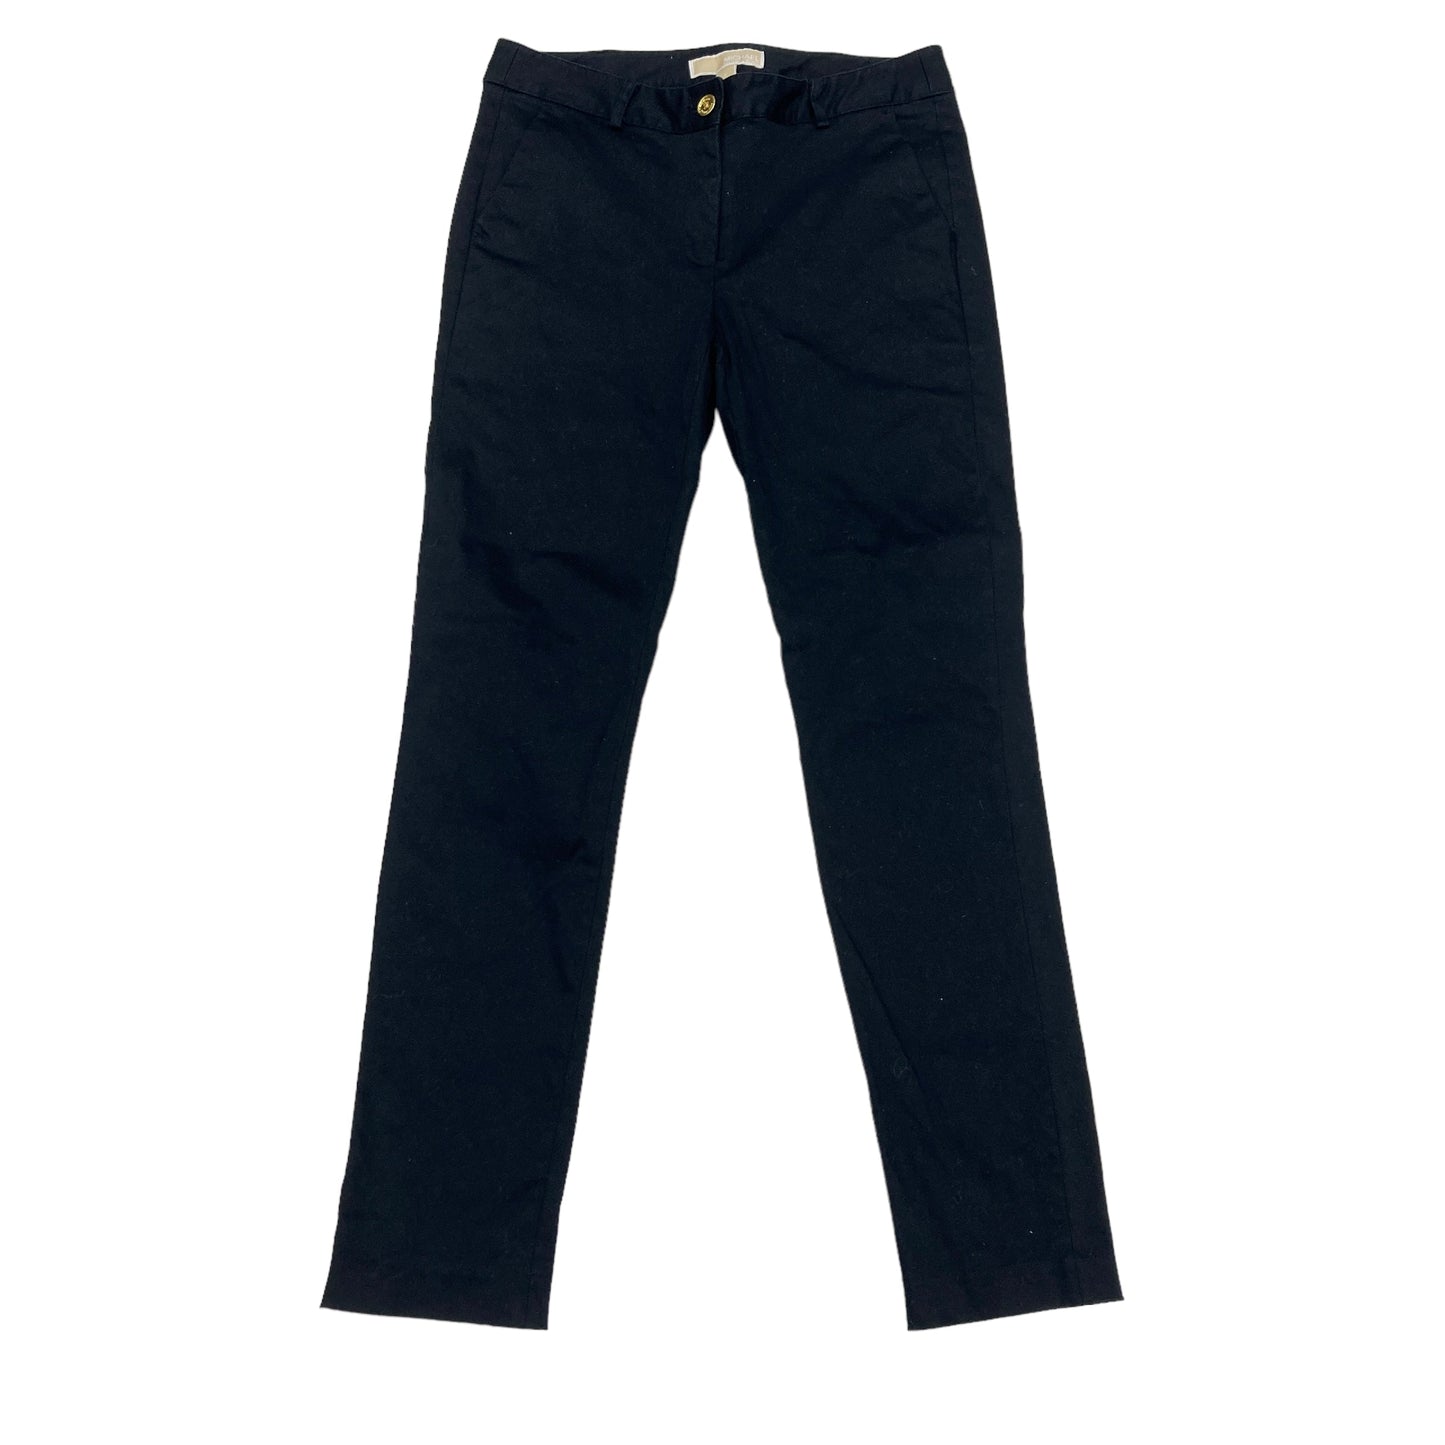 Pants Designer By Michael Kors  Size: 2